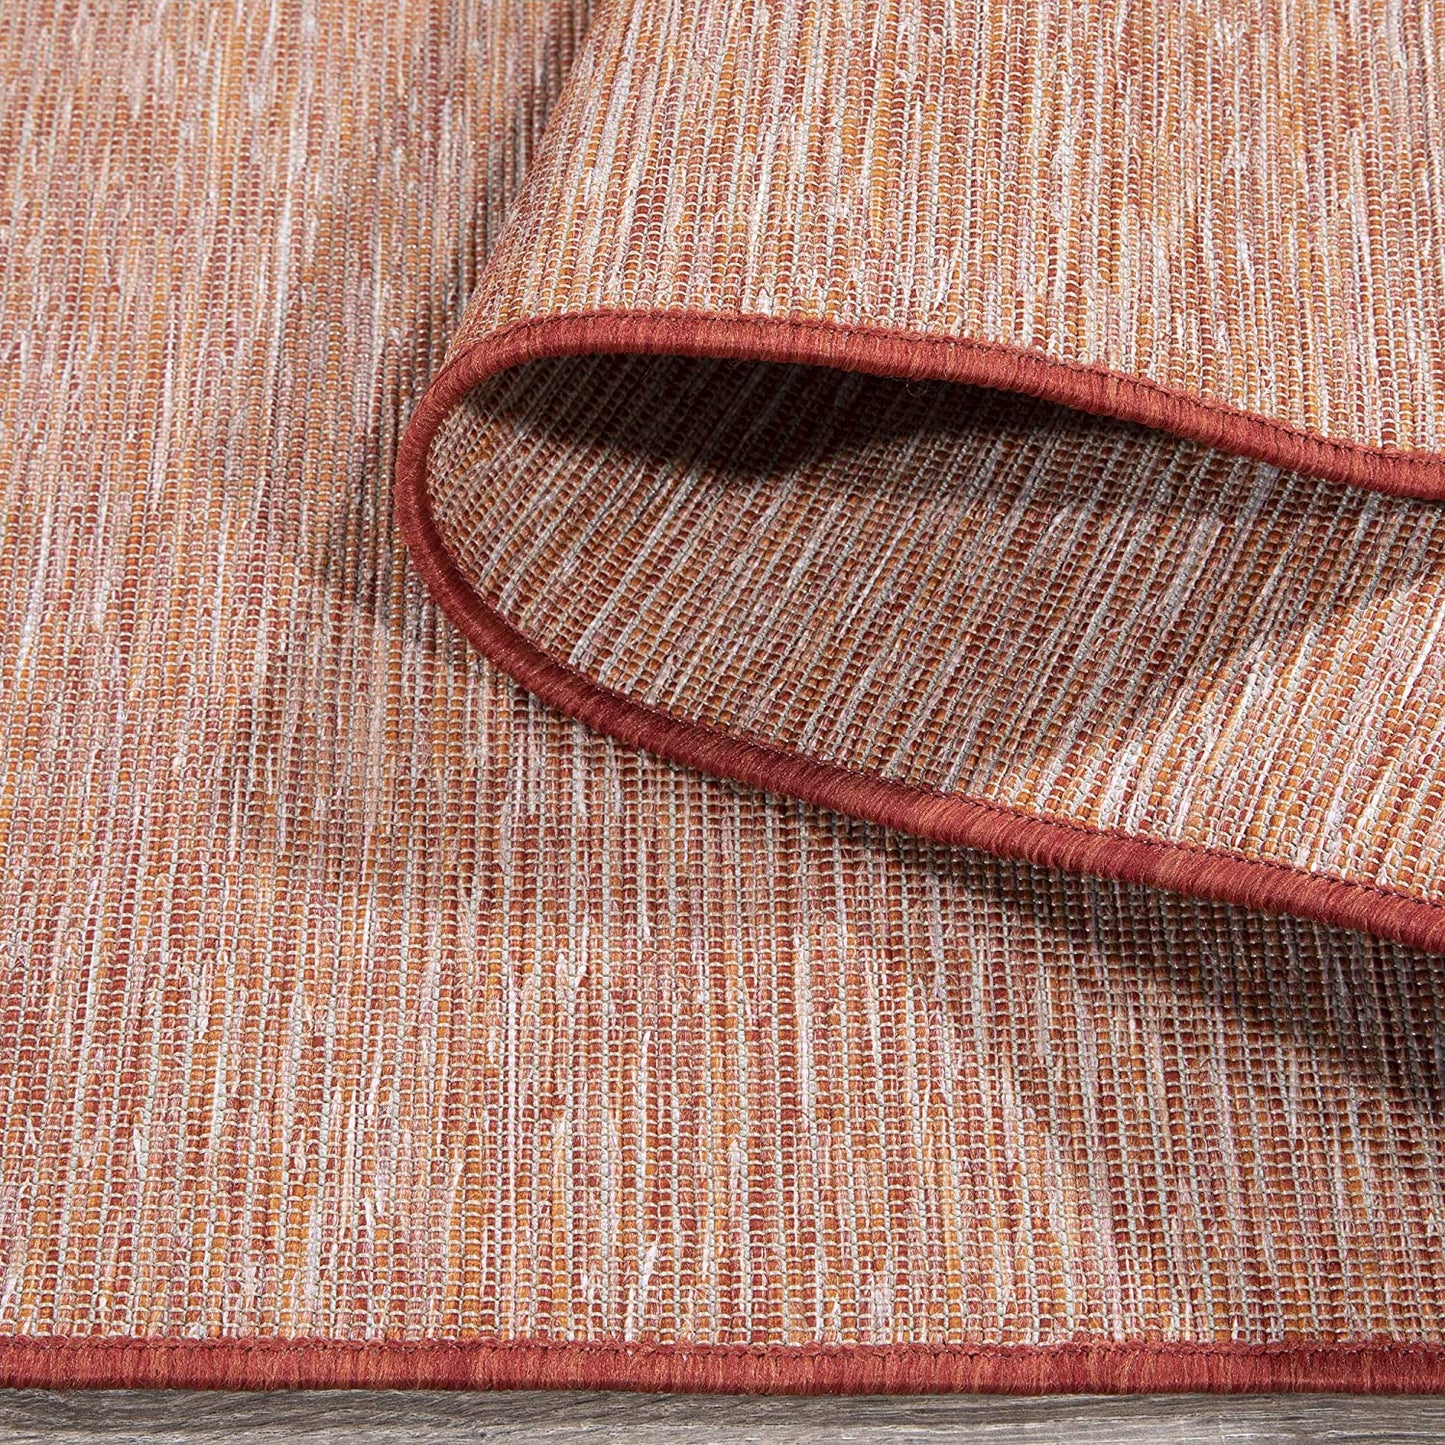 Sundance Collection Reversible Indoor & Outdoor Solid Design Runner Rug, Red/Orange